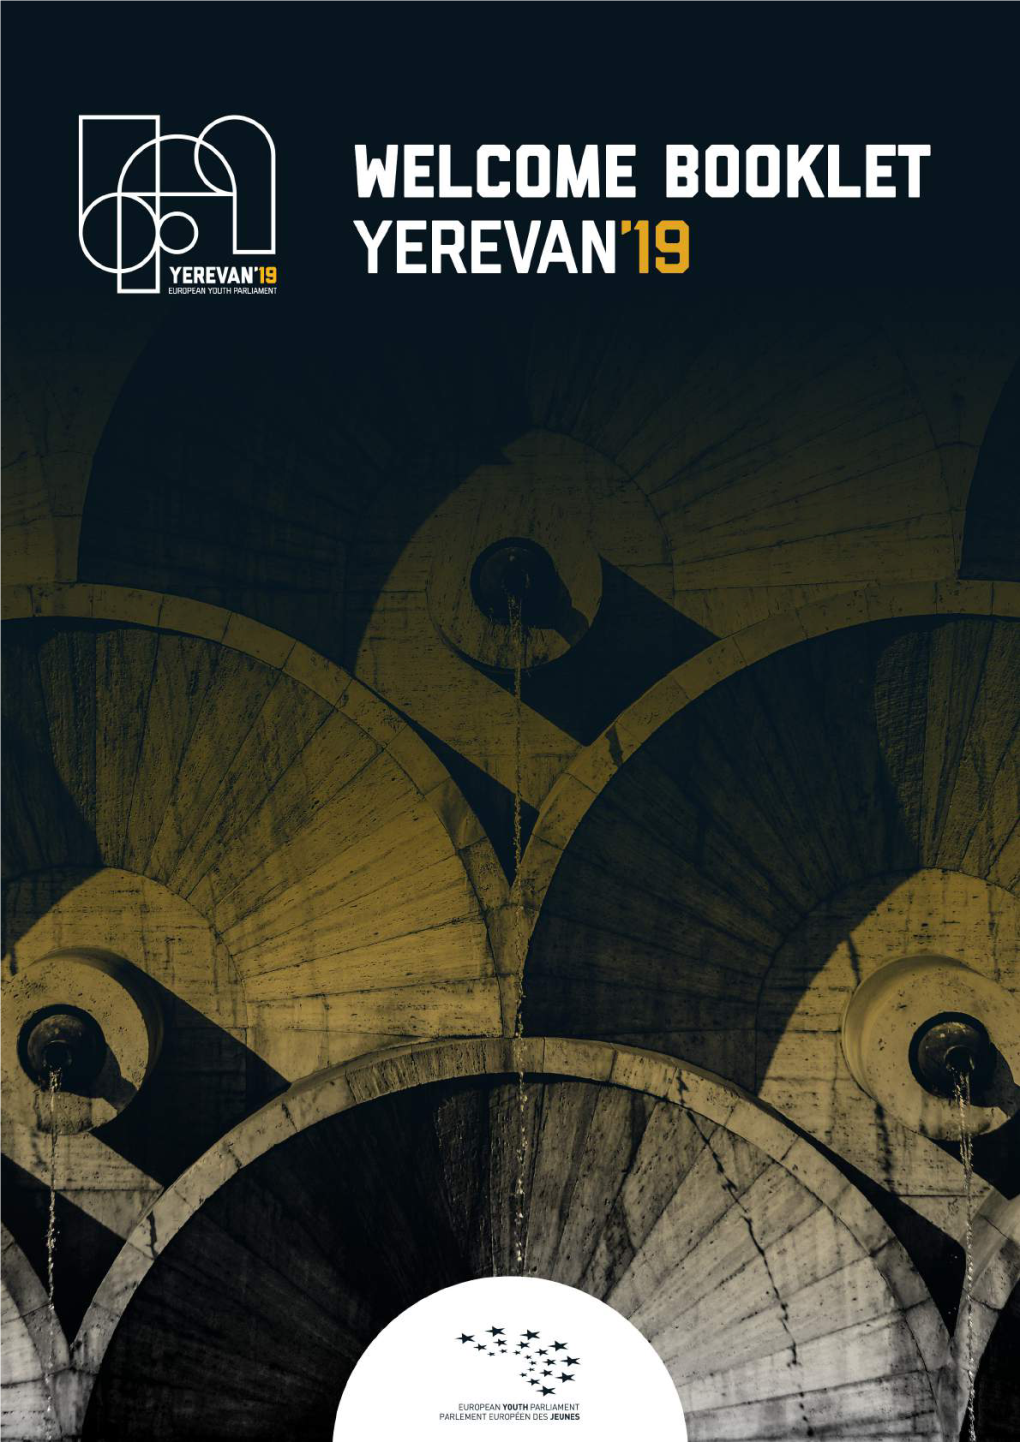 Yerevan 2019 Welcome Booklet.Pdf